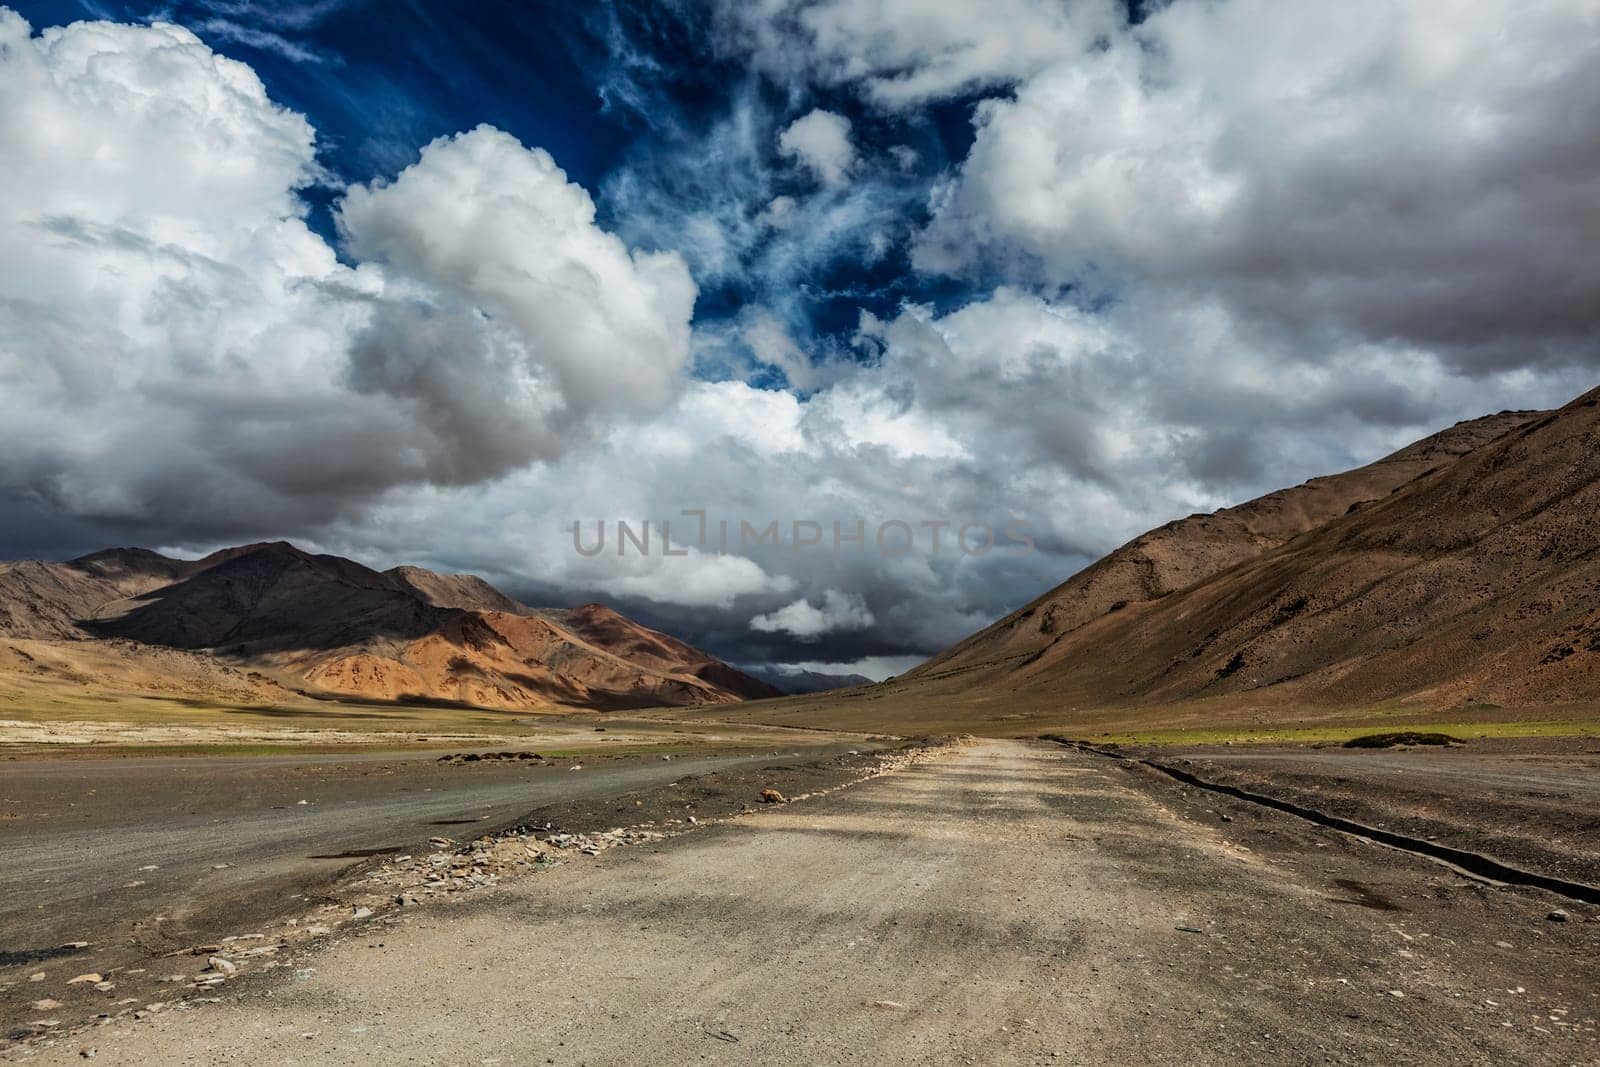 Trans-Himalayan Manali-Leh highway in Himalayas. More plains, Ladakh, Jammu and Kashmir, India